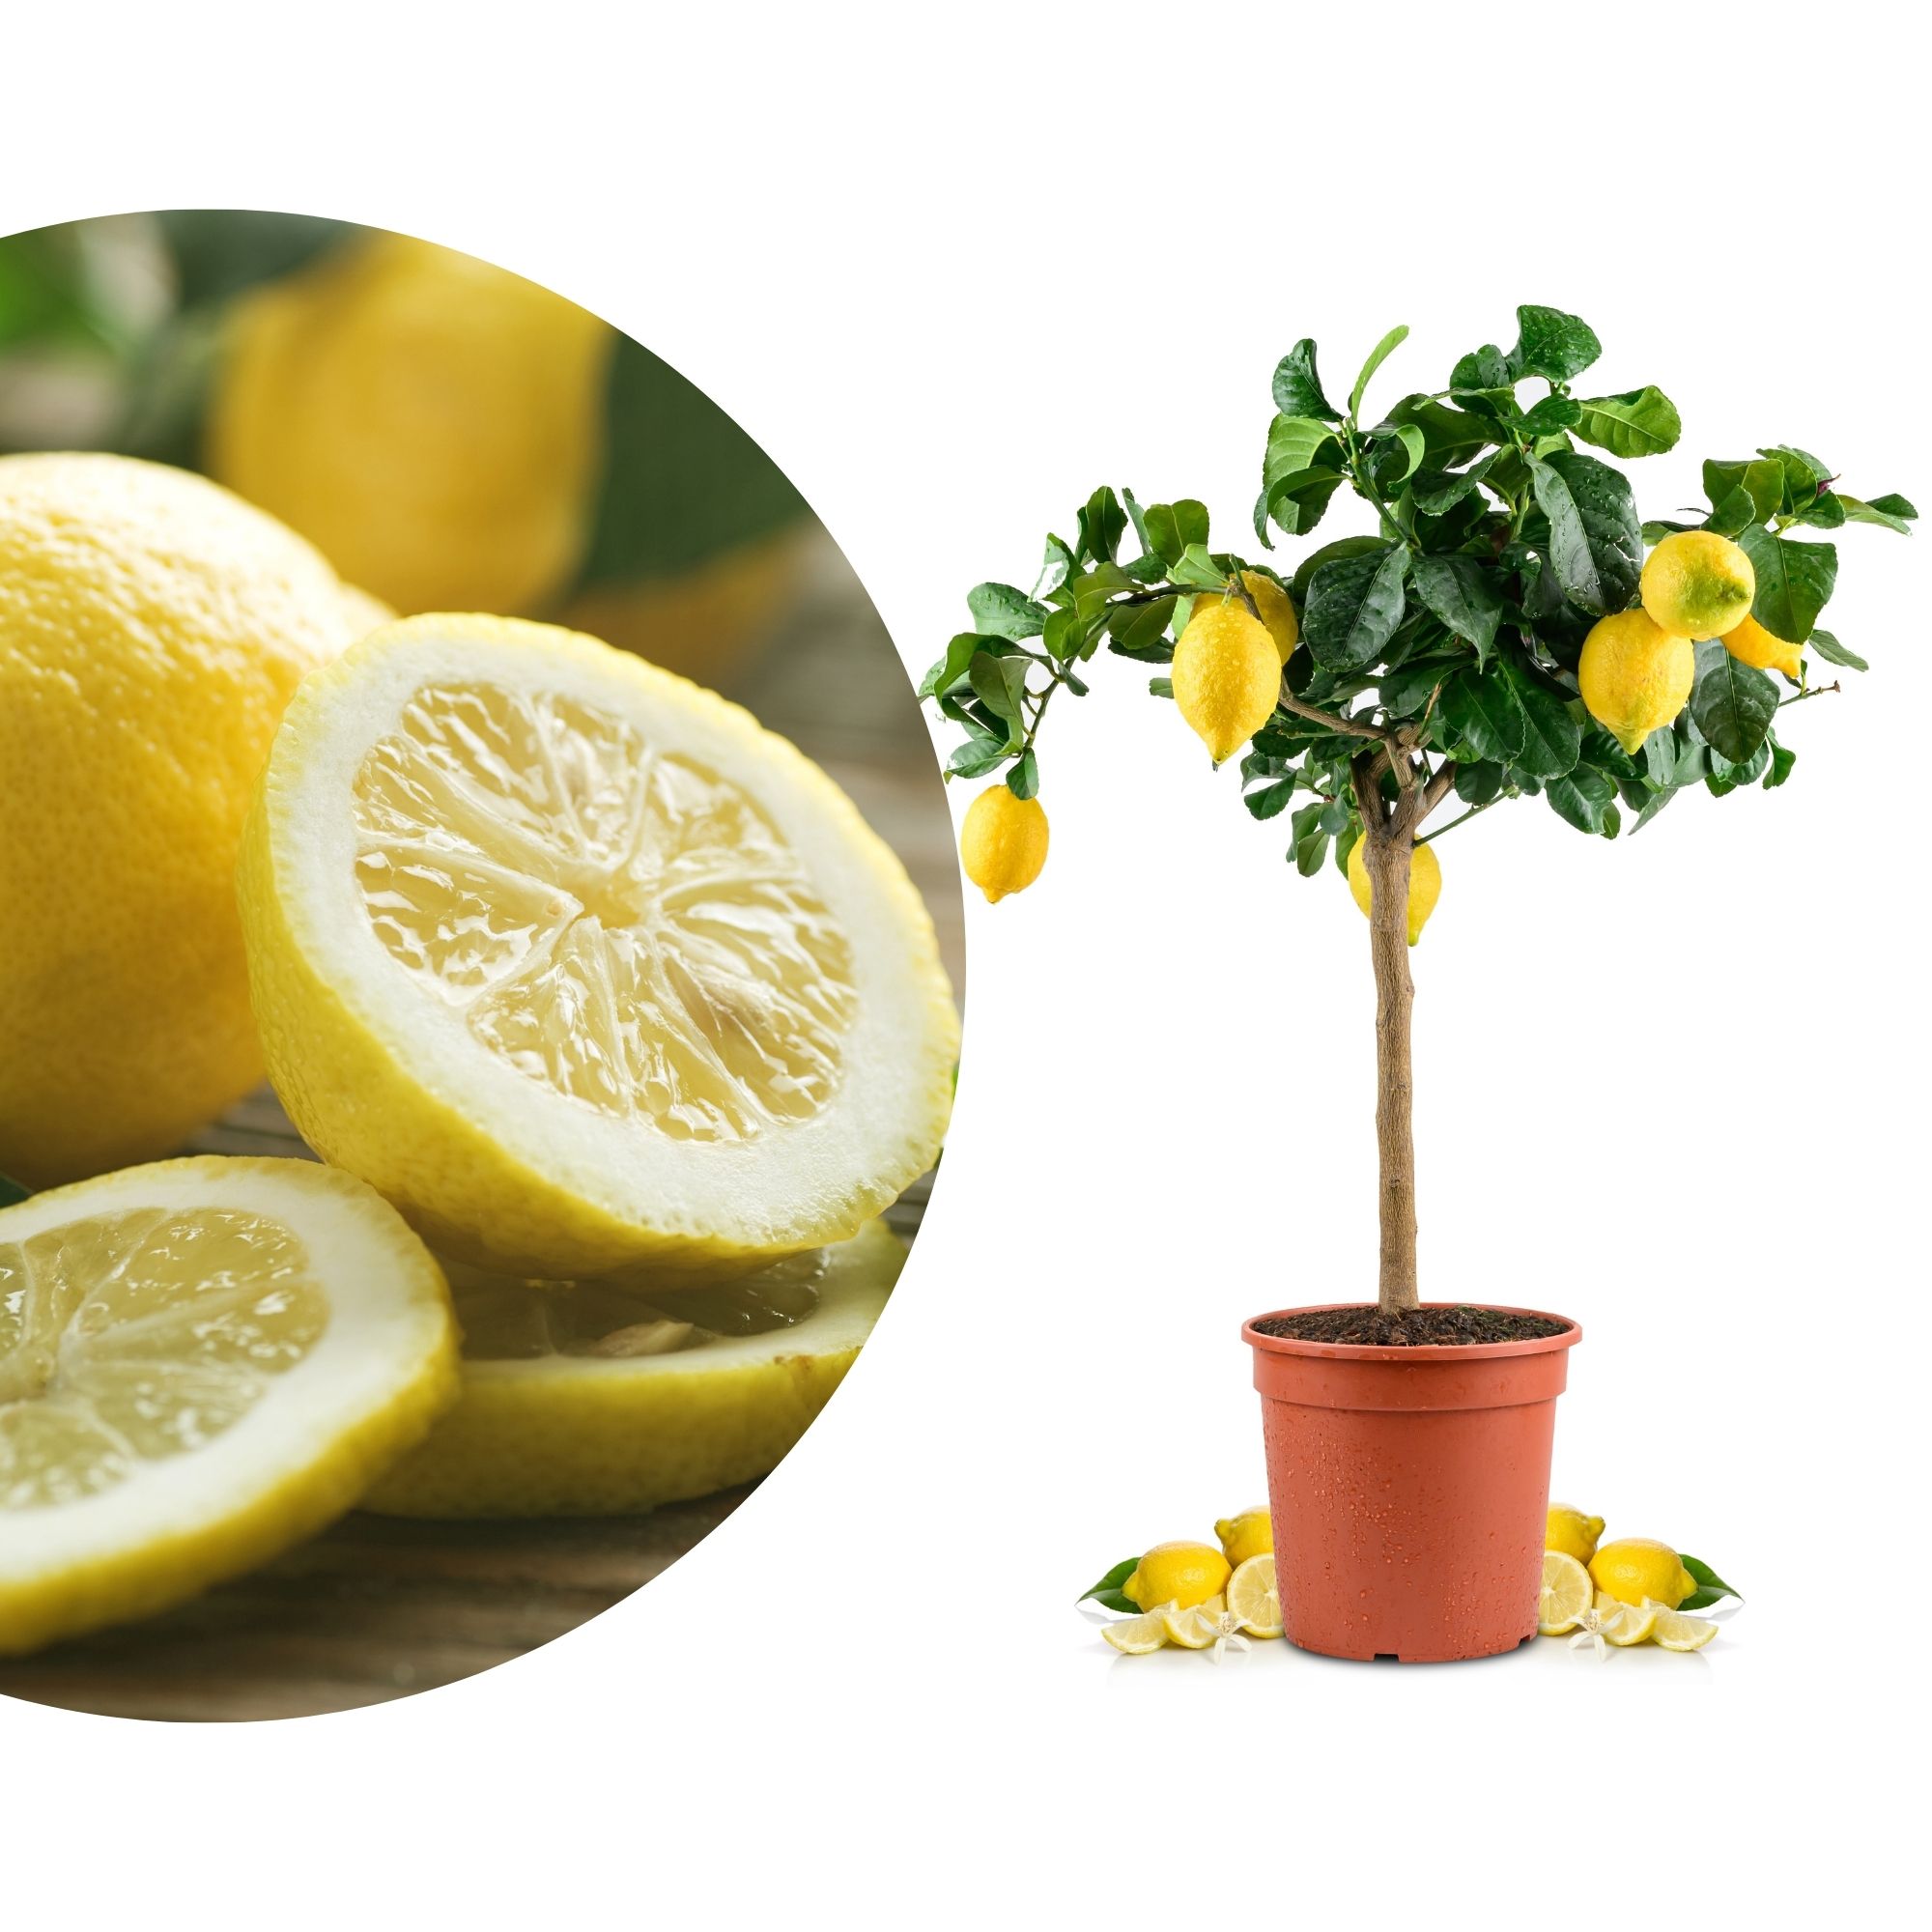 Carrubaro Zitrone - Citrus Limon 'Feminello Carrubaro' - Sizilianische Zitrone